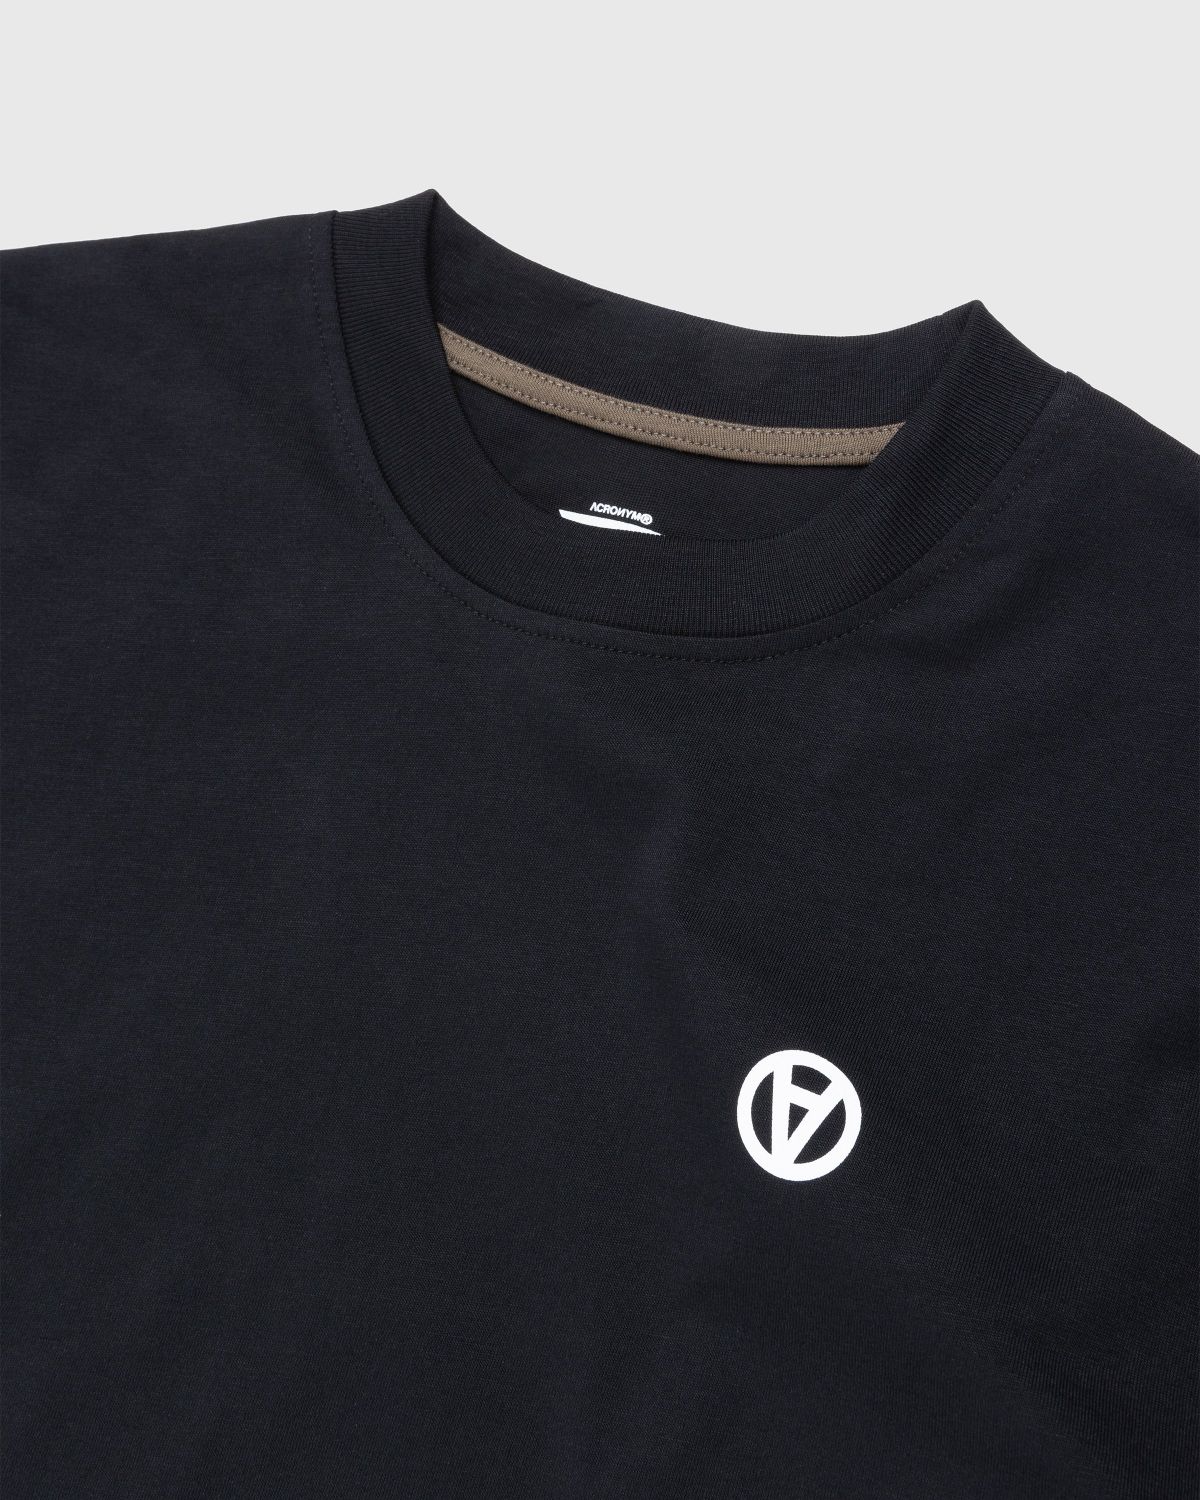 ACRONYM – S28-PR-A Organic Cotton T-Shirt Black - T-Shirts - Black - Image 5